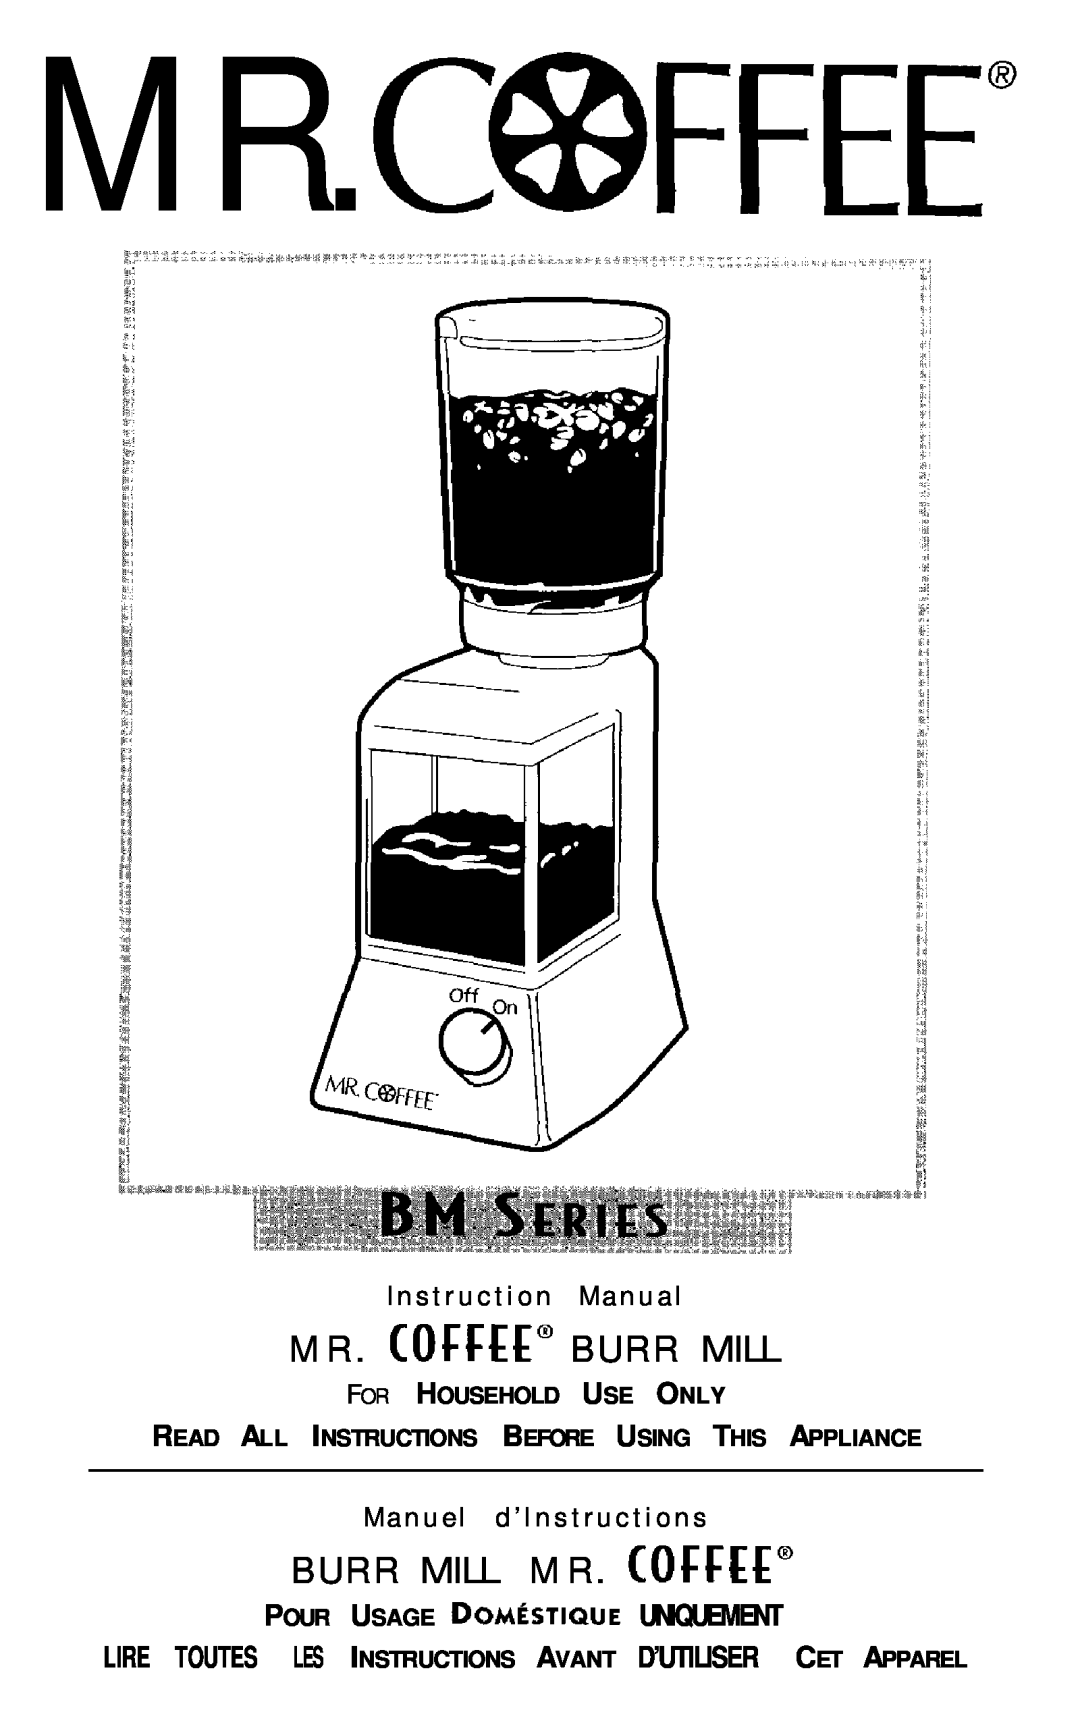 Mr. Coffee BM Series instruction manual M R . COffW B U R R MILL, B U R R MILL M R . COffEf”, Mr.C@Ffee@ 